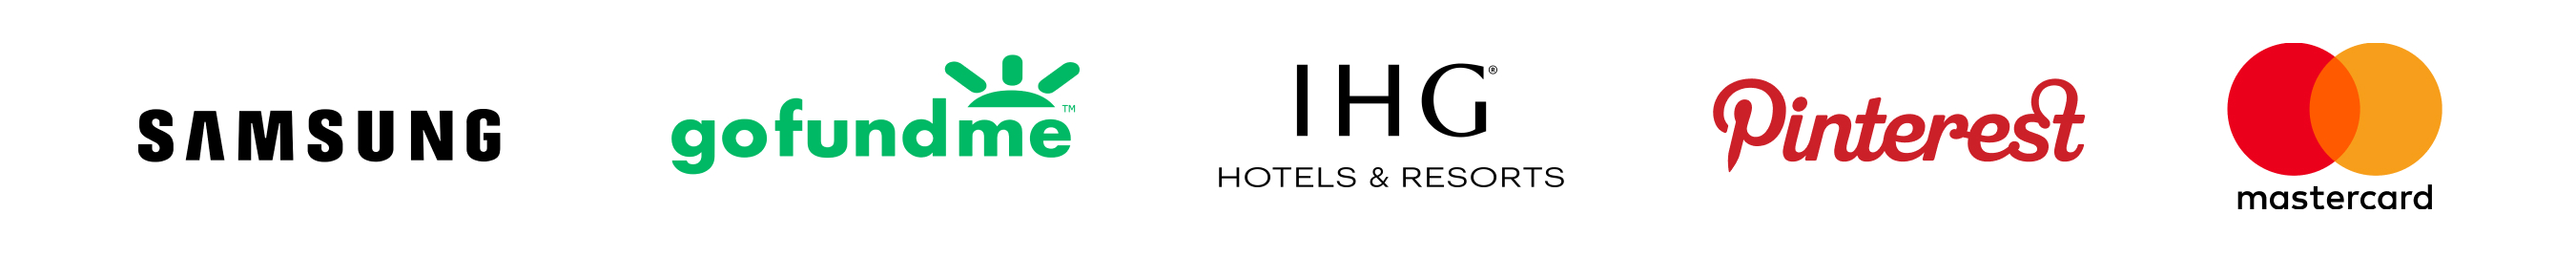 Samsung-logo, gofundme-logo, IGH Hotel and Resorts-logo, Pintrest-logo, Mastercard-logo